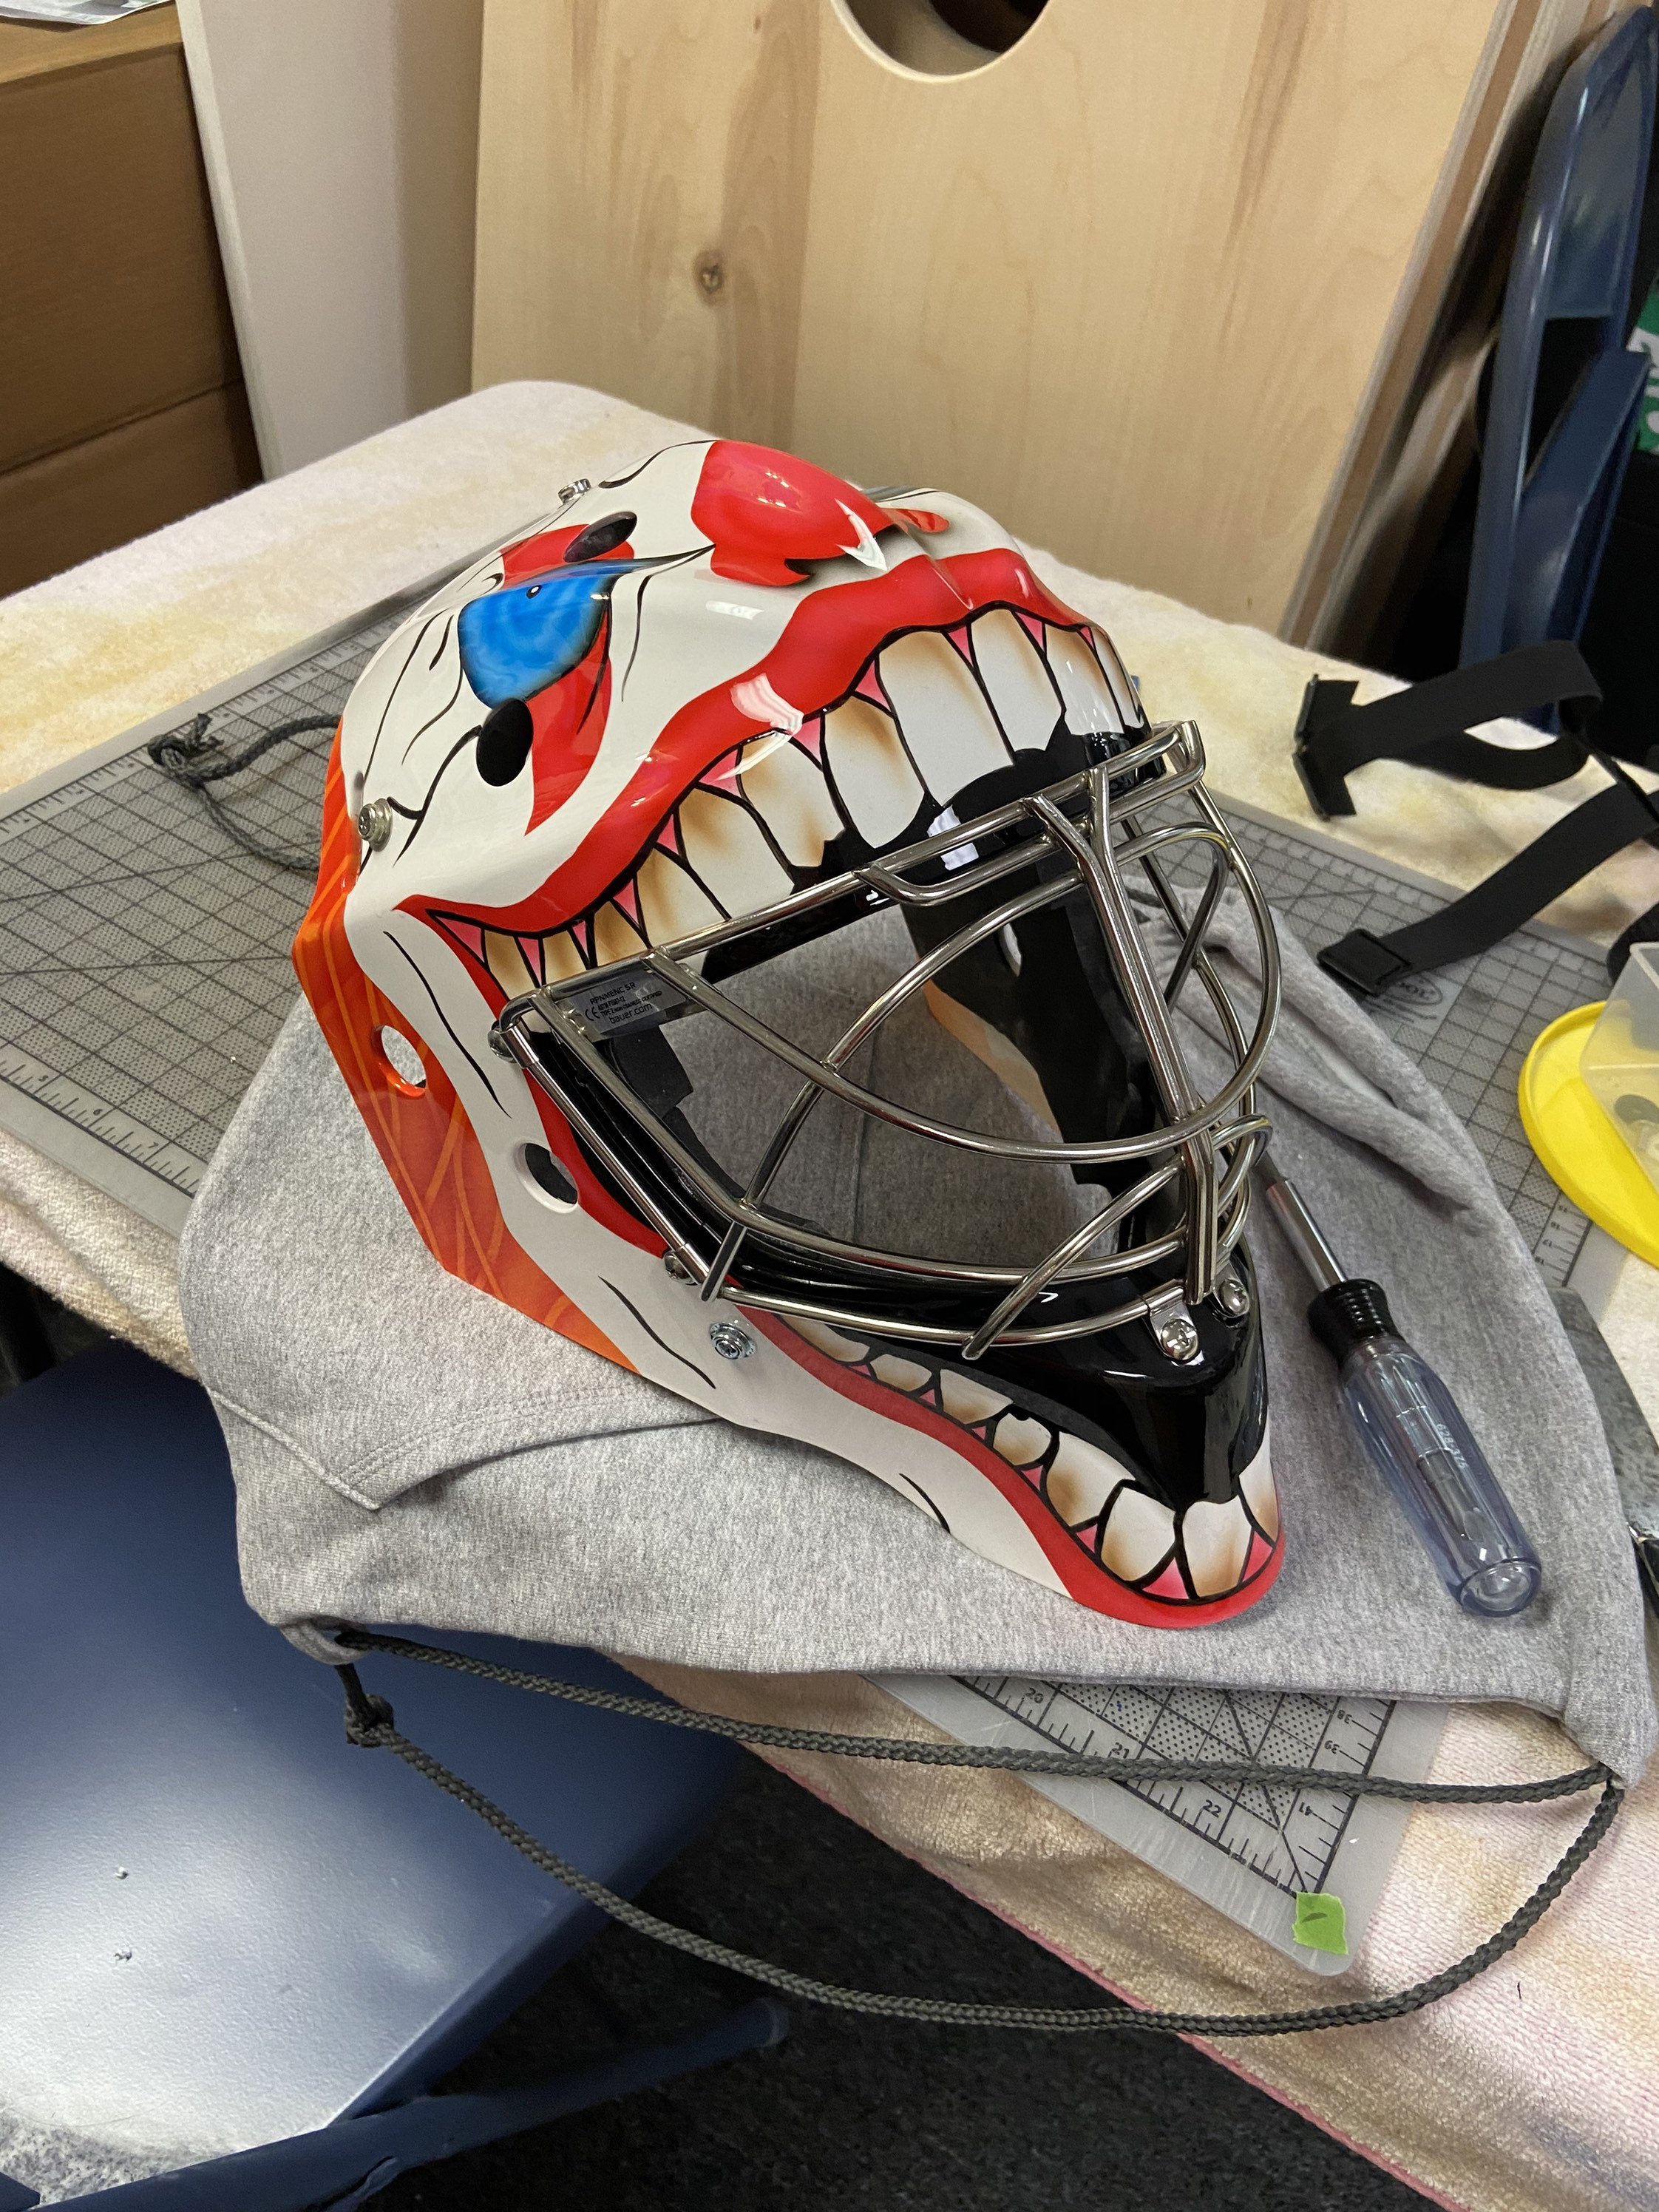 Custom Painted Goalie Mask: Danbury Trashers – Goalie Mask Collector